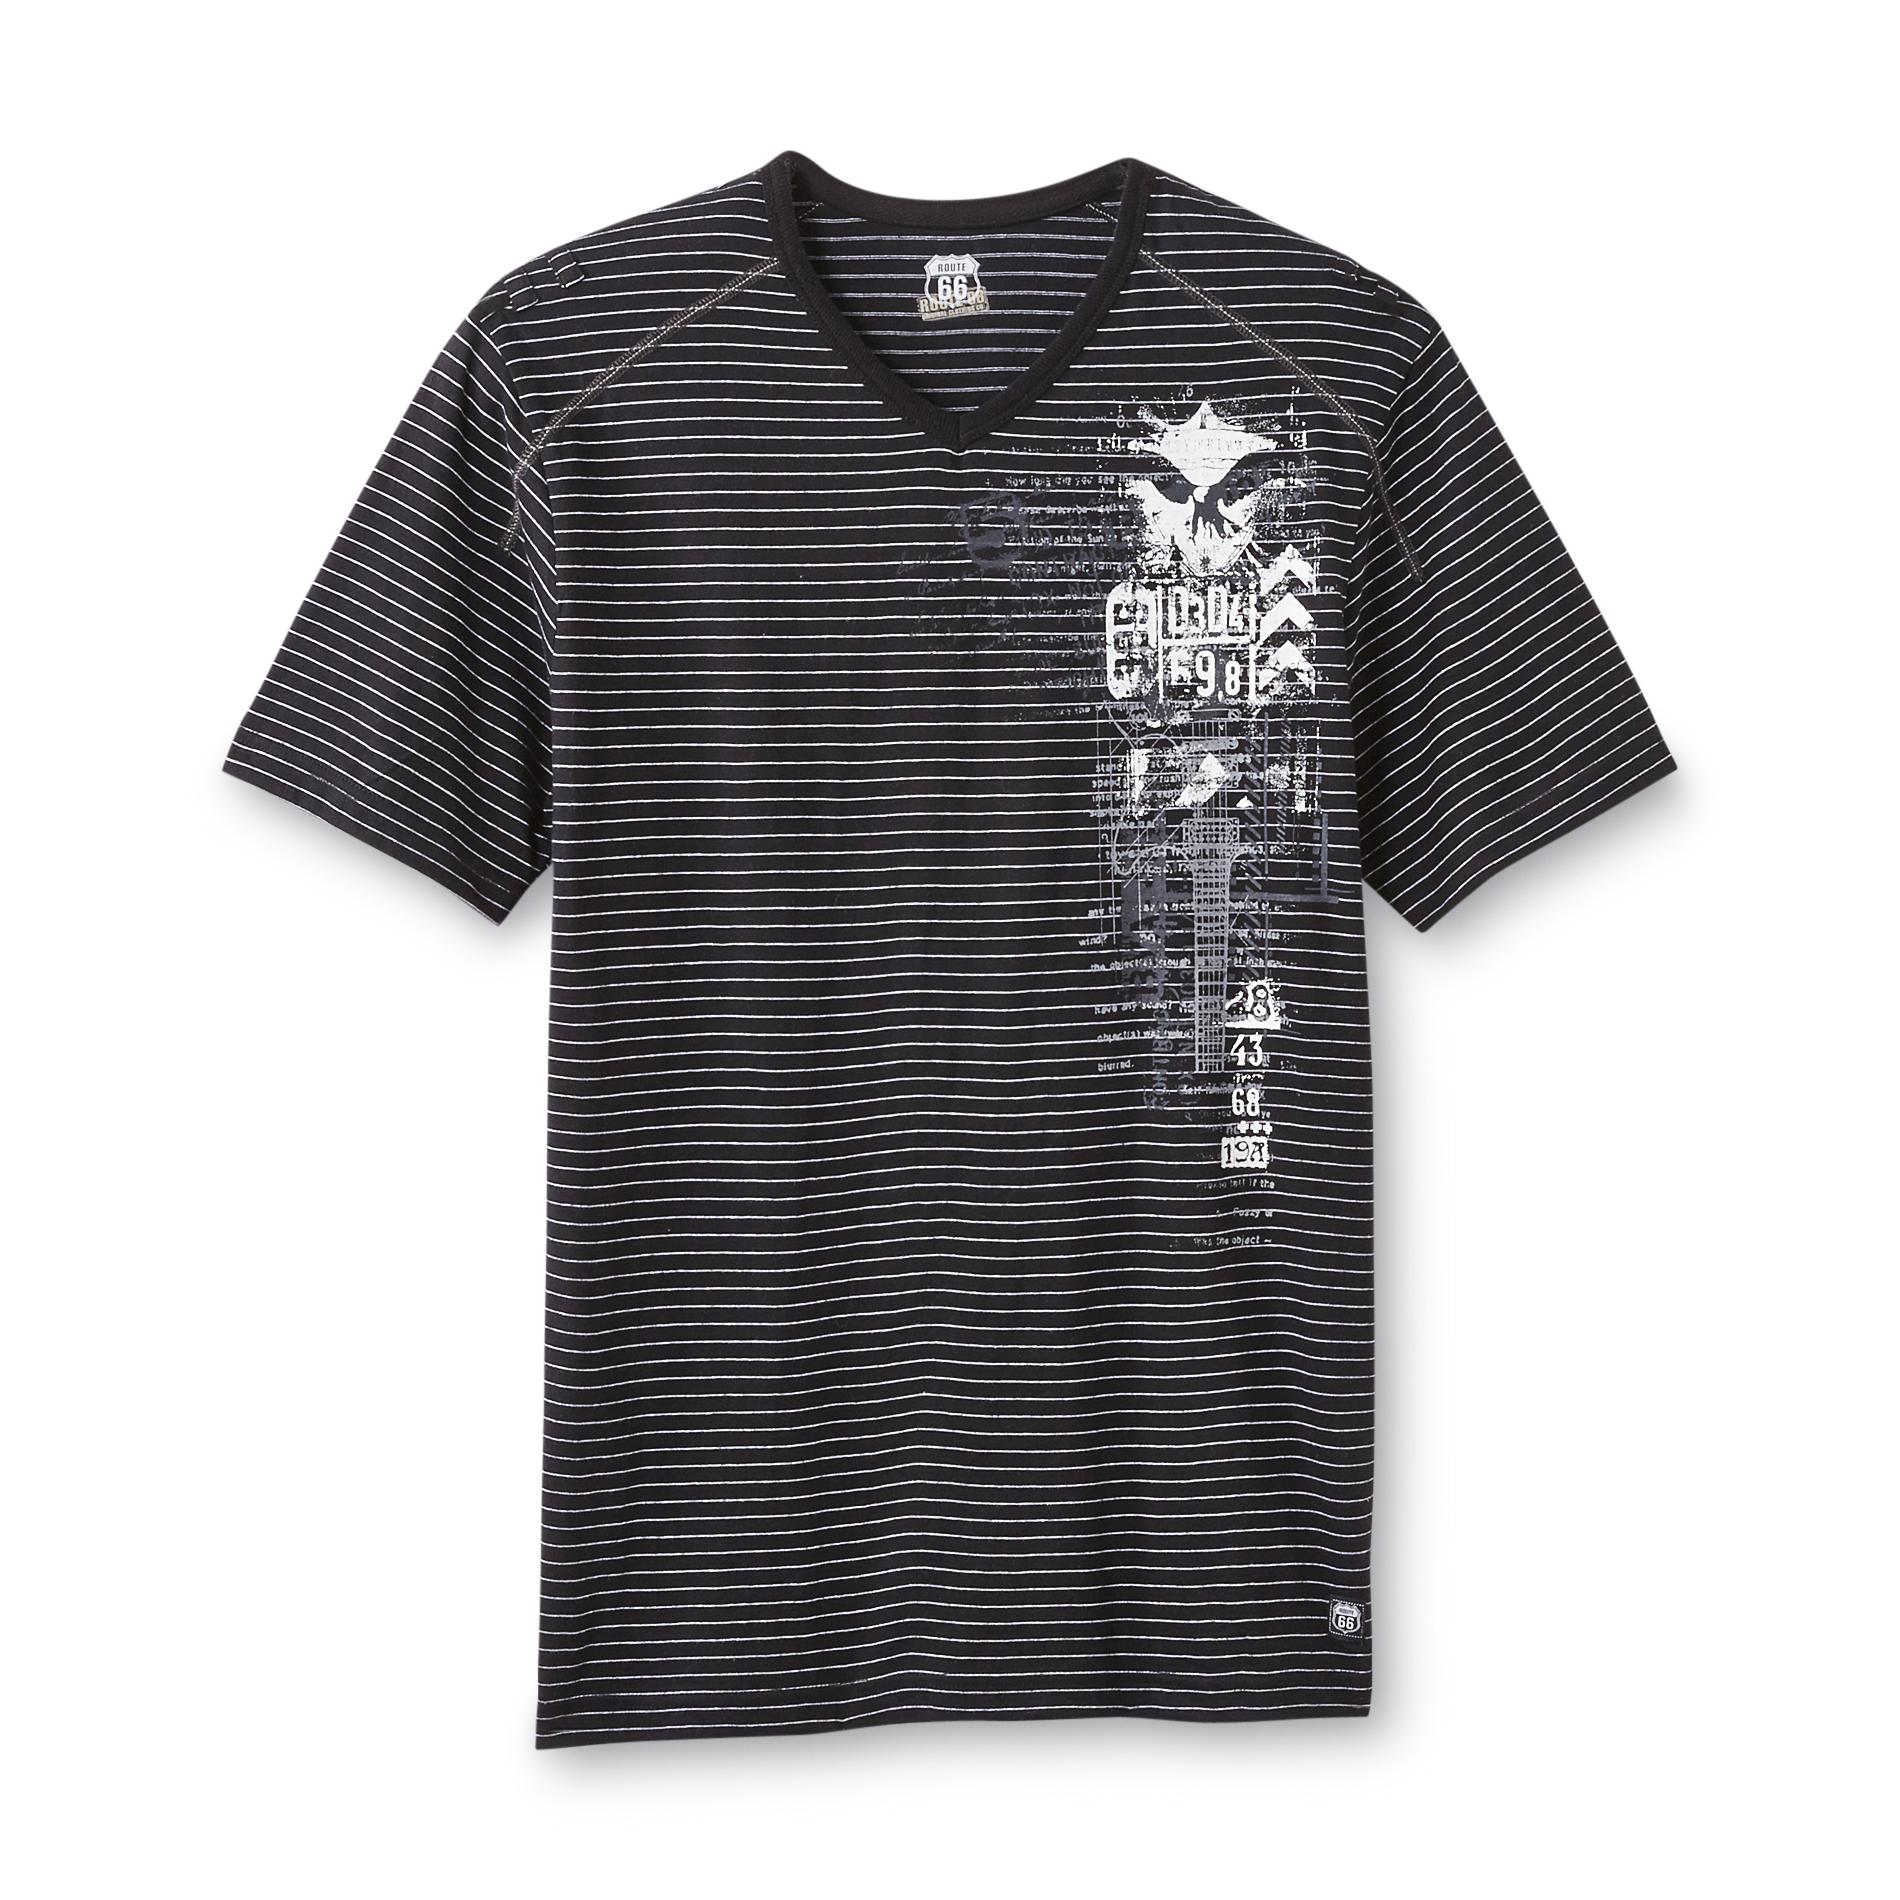 Route 66 Men's V-Neck Graphic T-Shirt - Striped